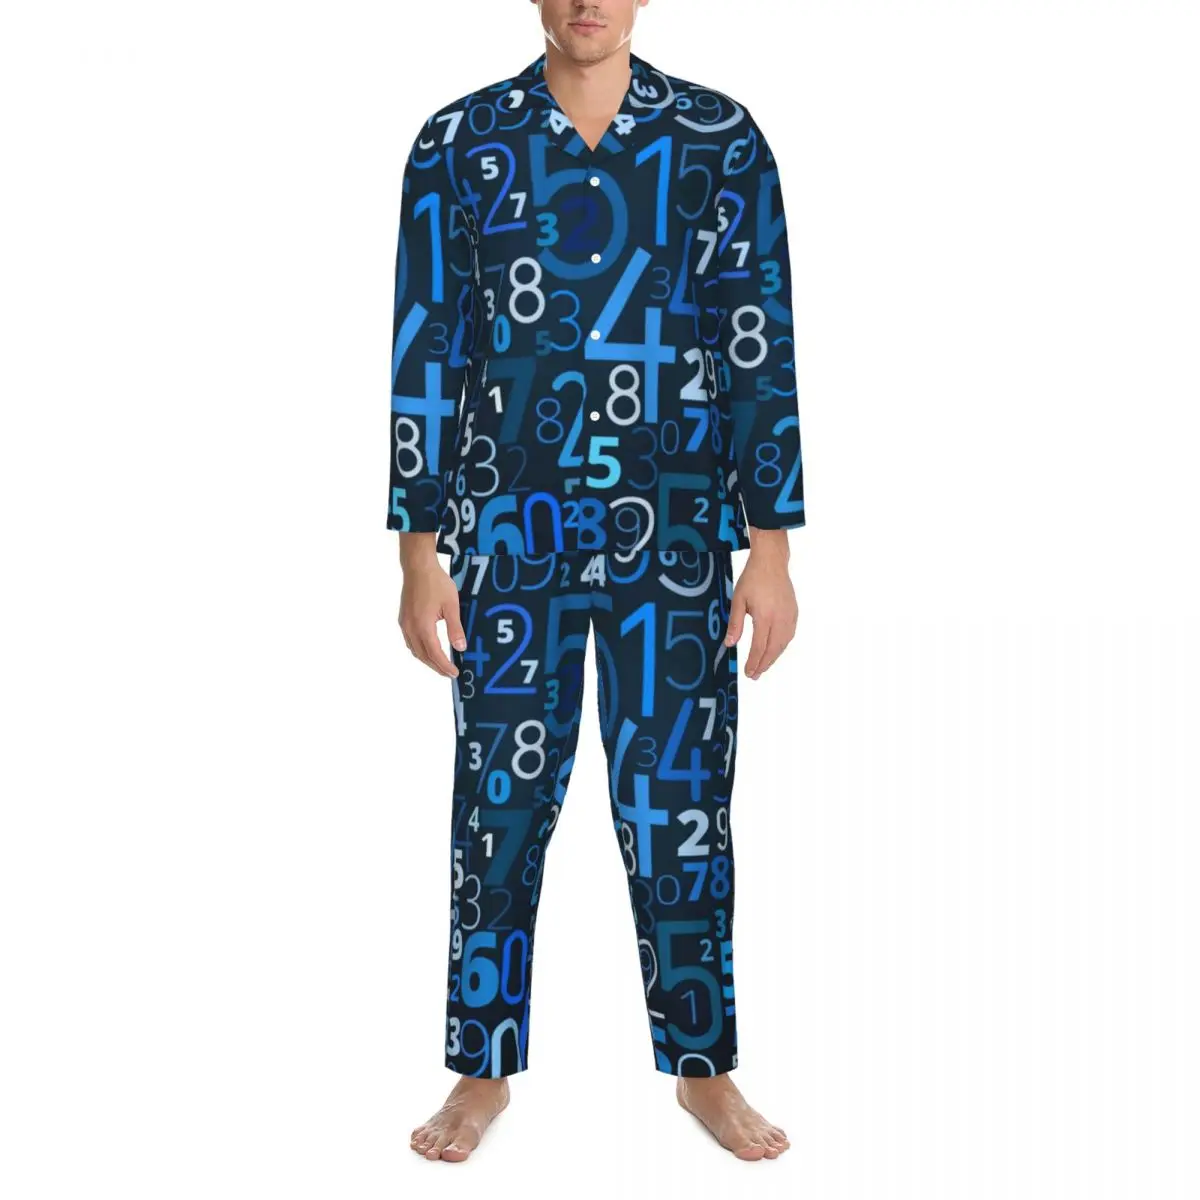 

Math Numbers Pajama Sets Autumn Colorful Code Print Cute Sleep Sleepwear Men 2 Piece Vintage Oversized Design Home Suit Gift